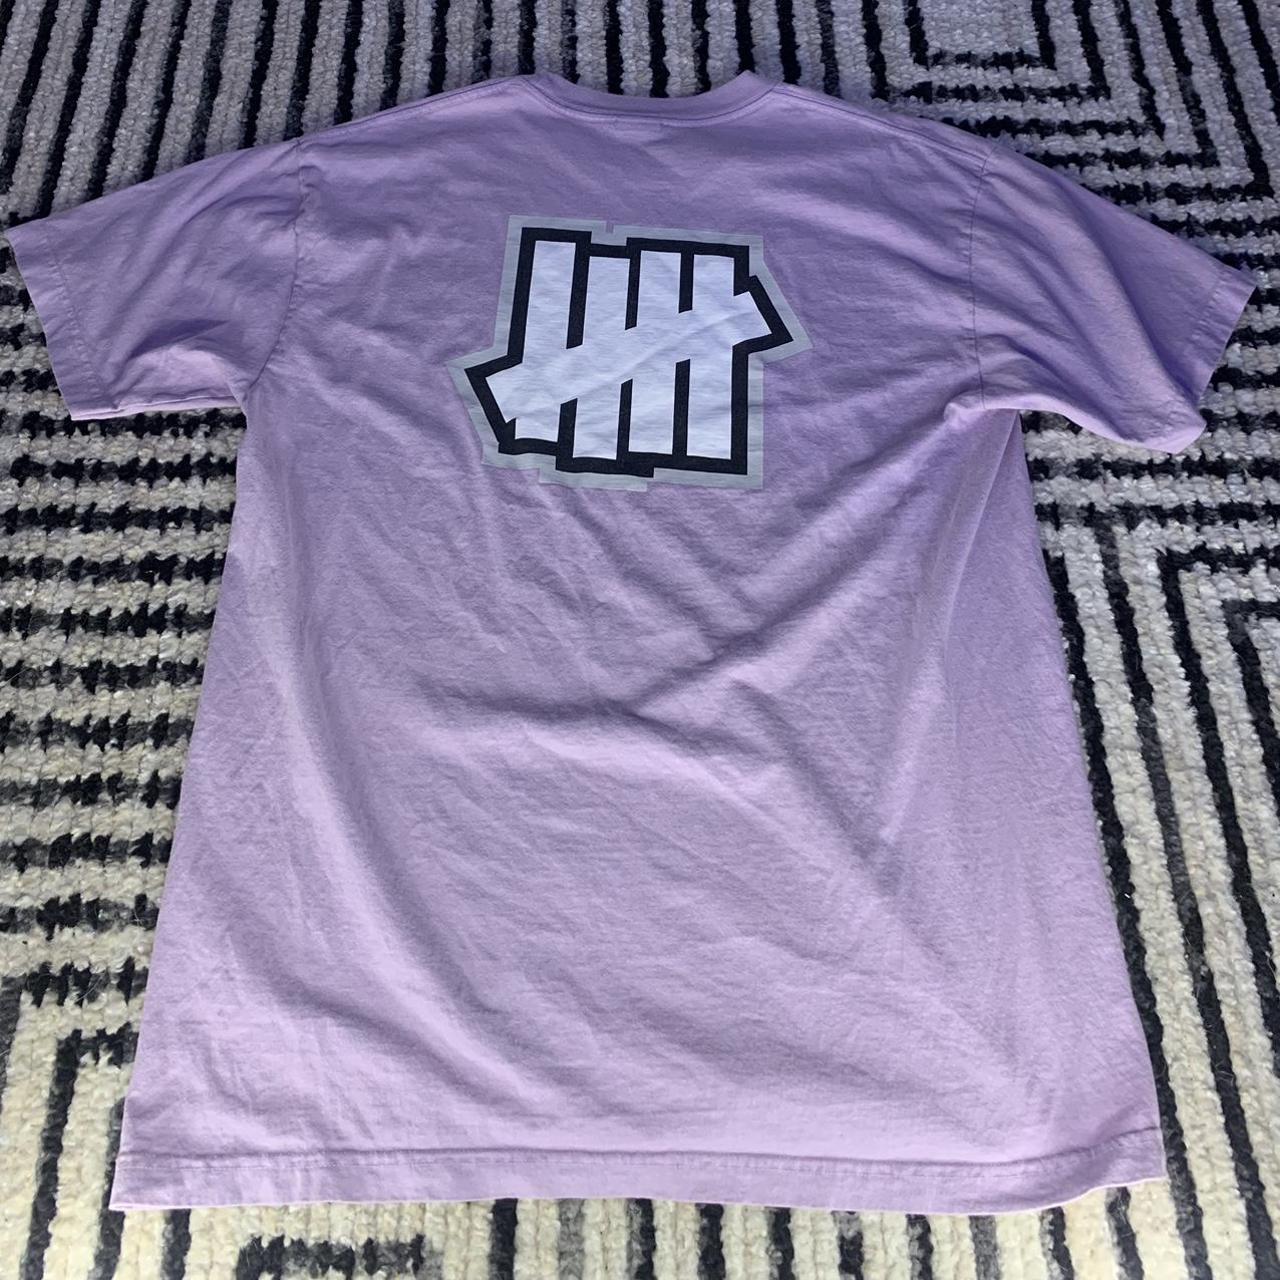 Undefeated Men's Purple T-shirt (2)